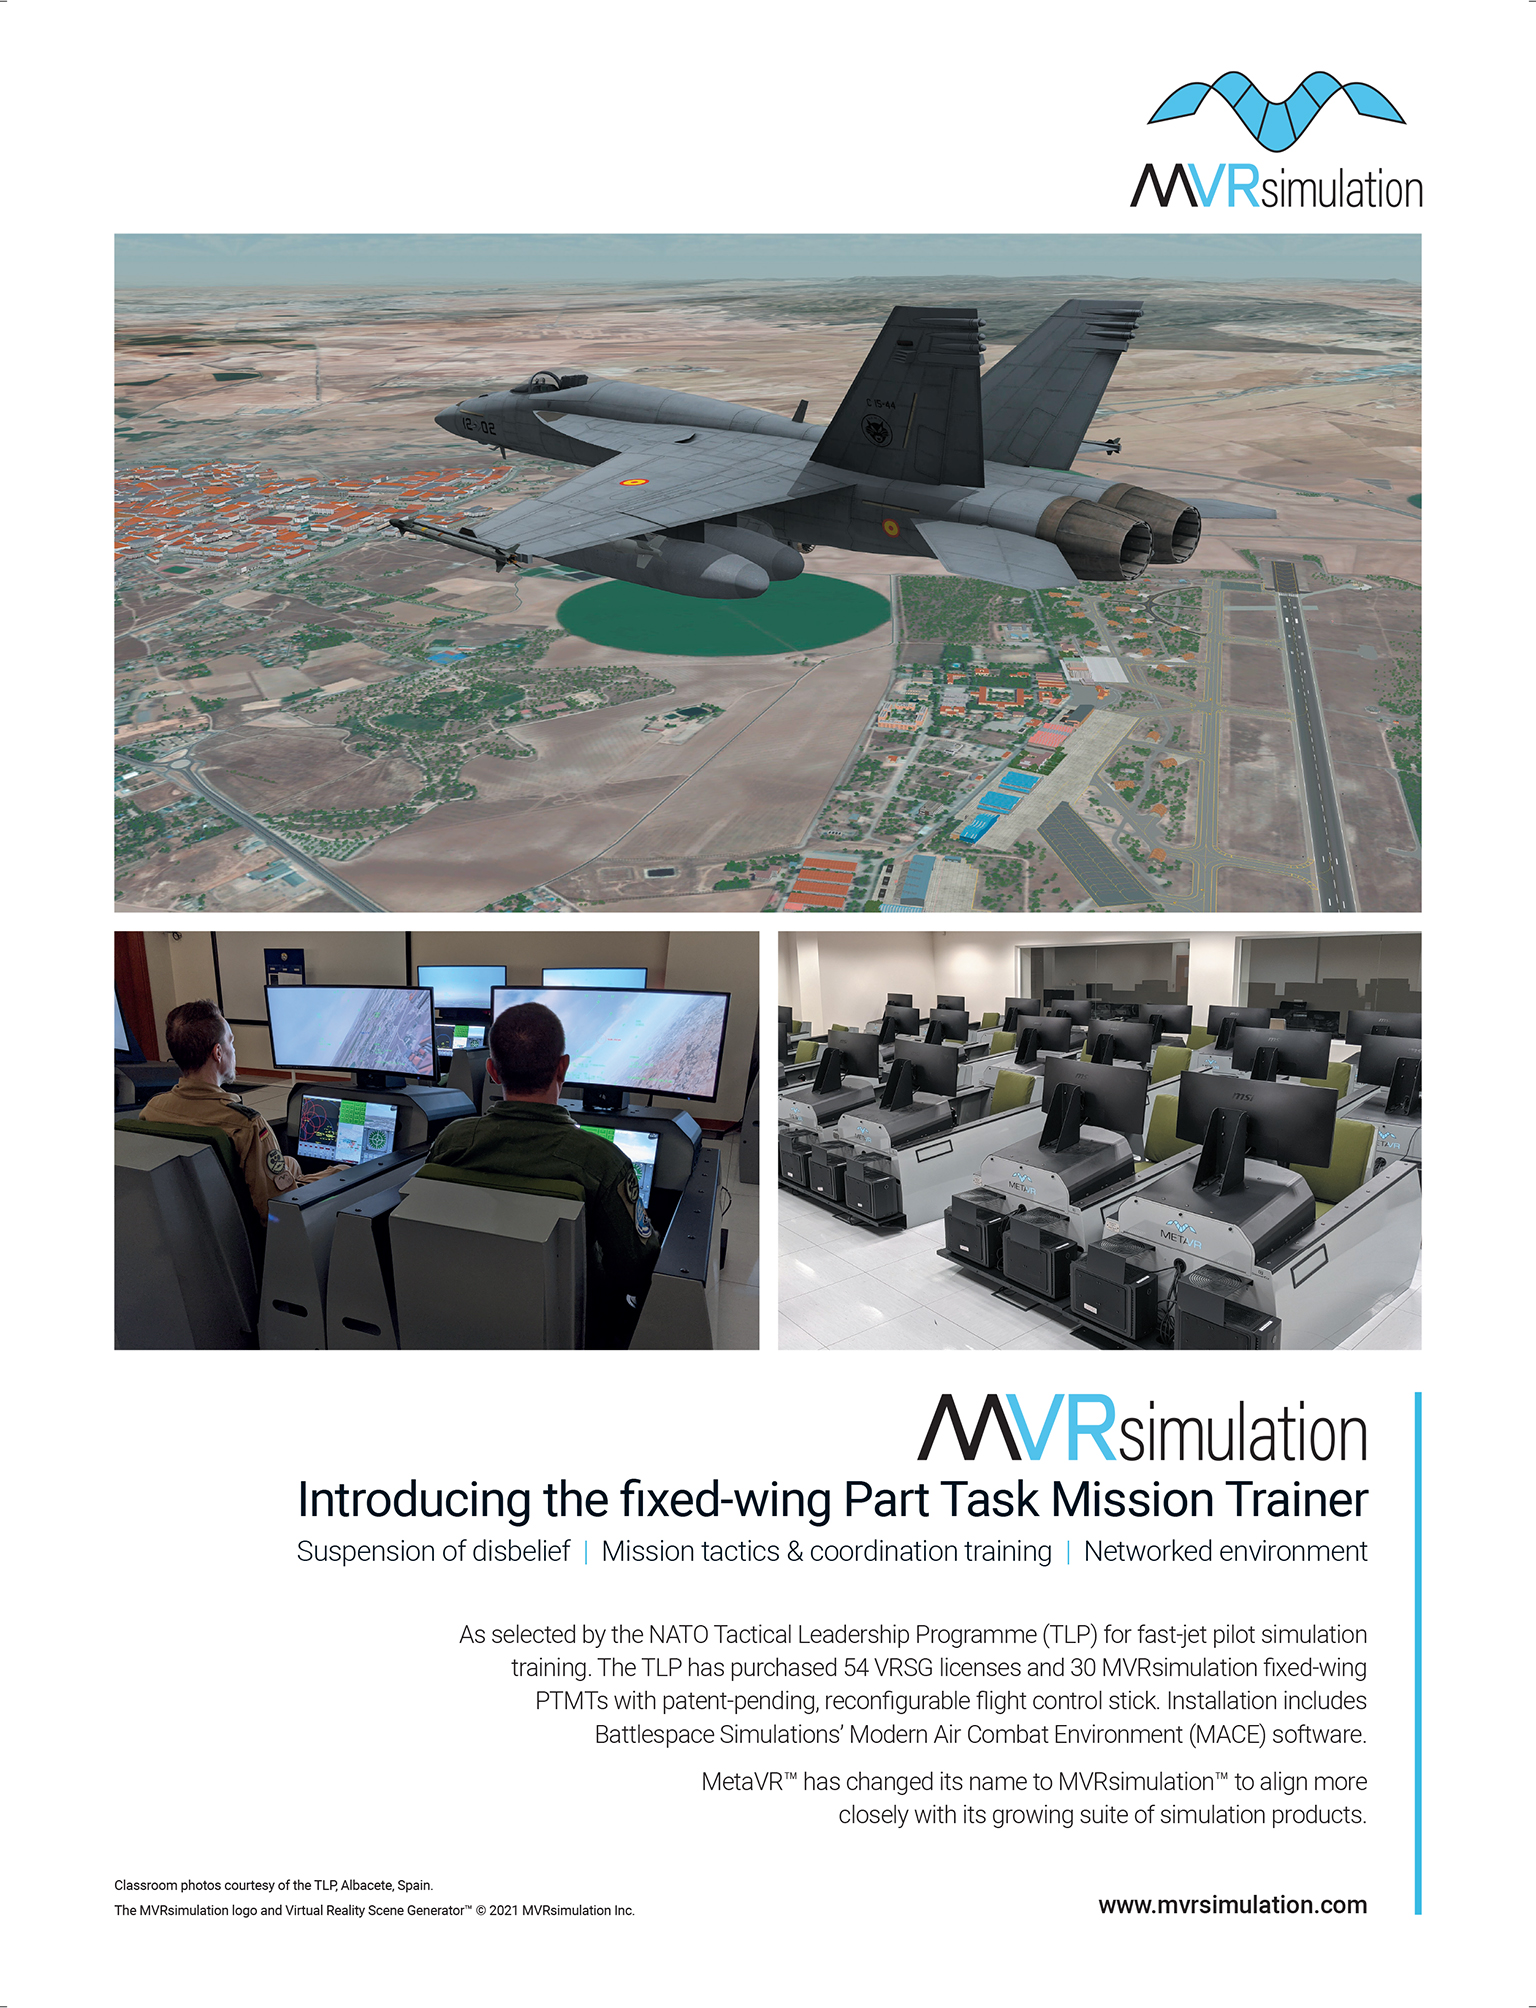 Halldale, Military Simulation & Training (Issue 4, 2021)